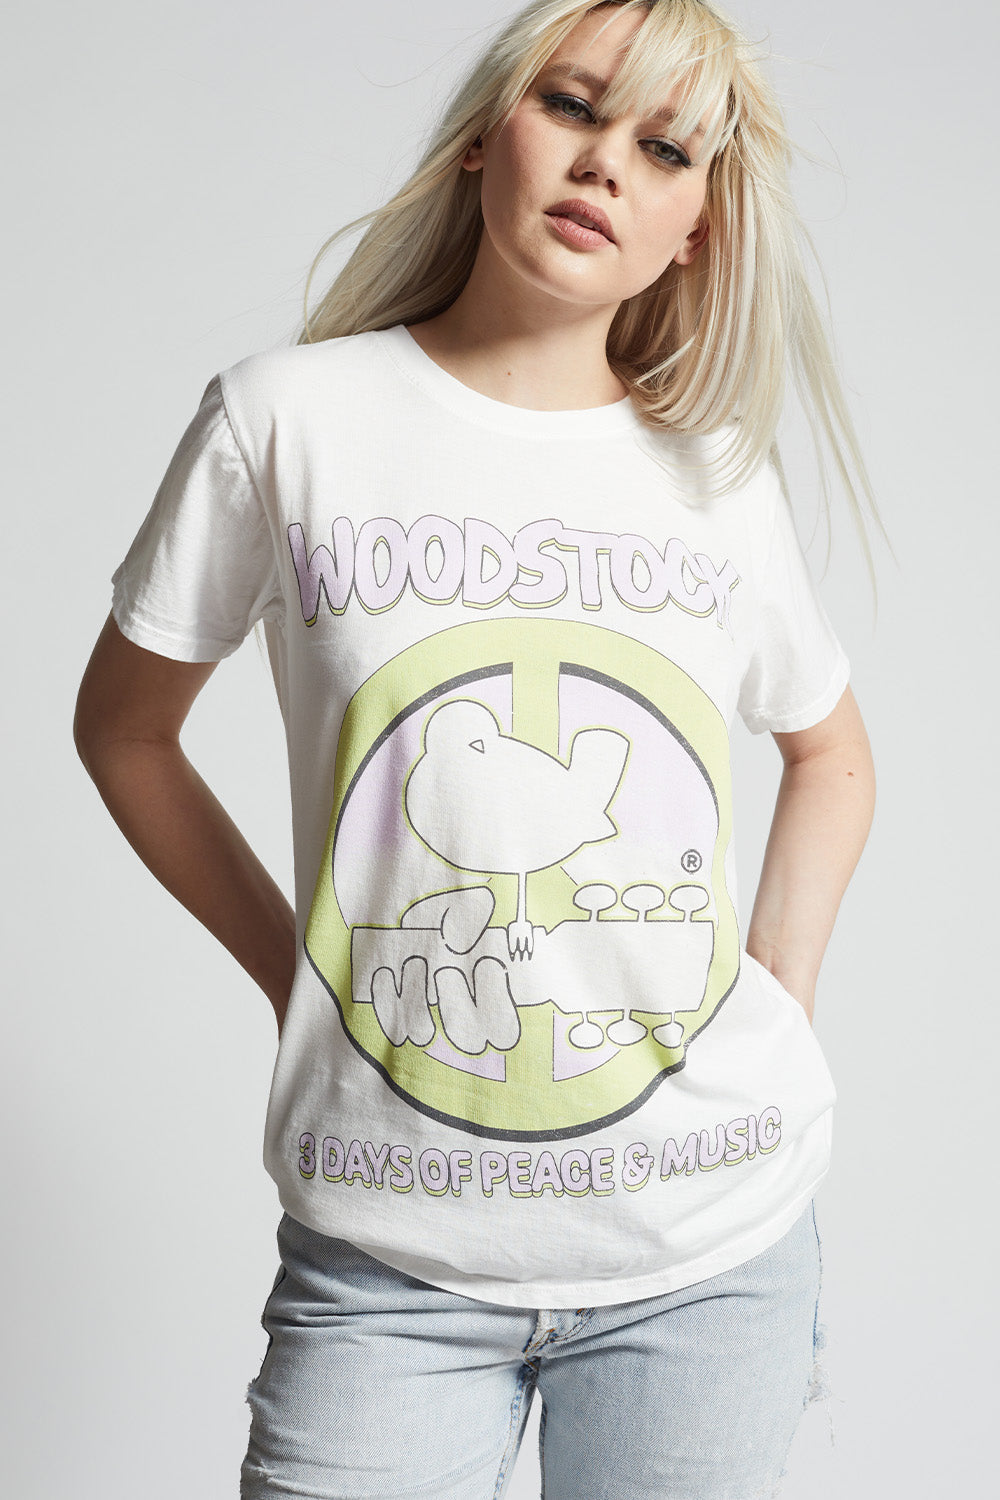 Woodstock graphic t